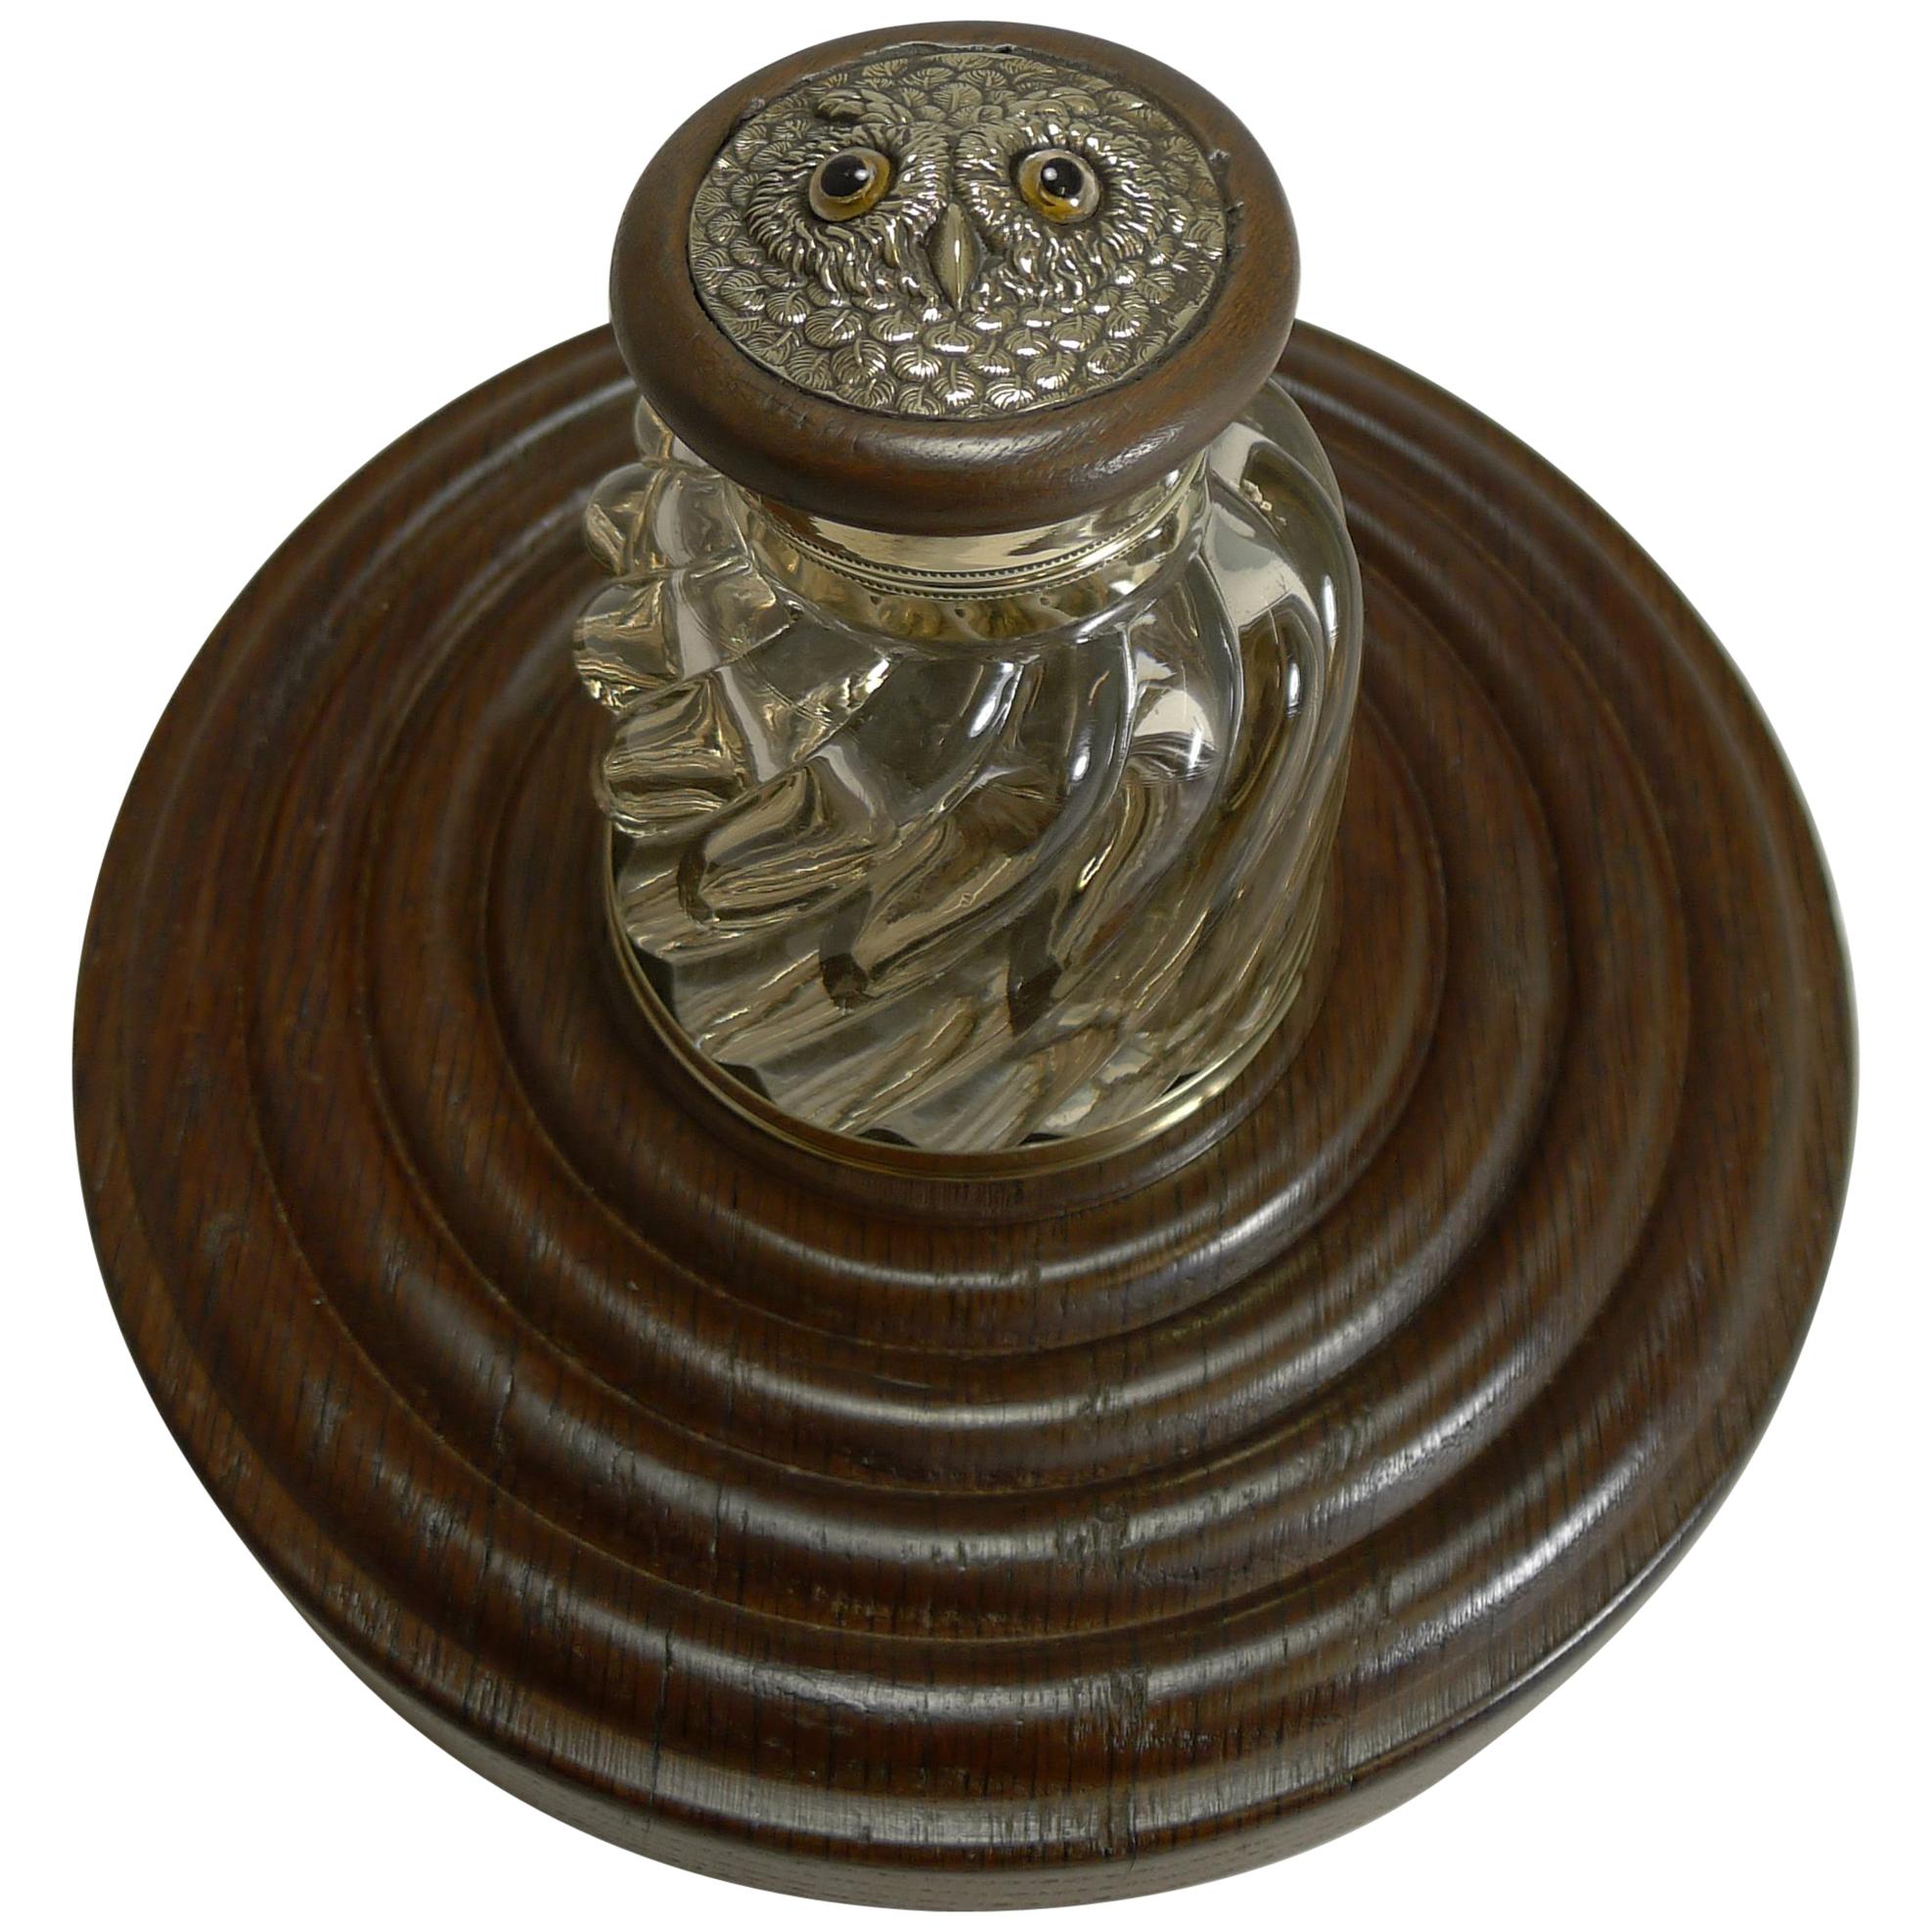 Antique English Novelty Inkwell, Owl, circa 1890